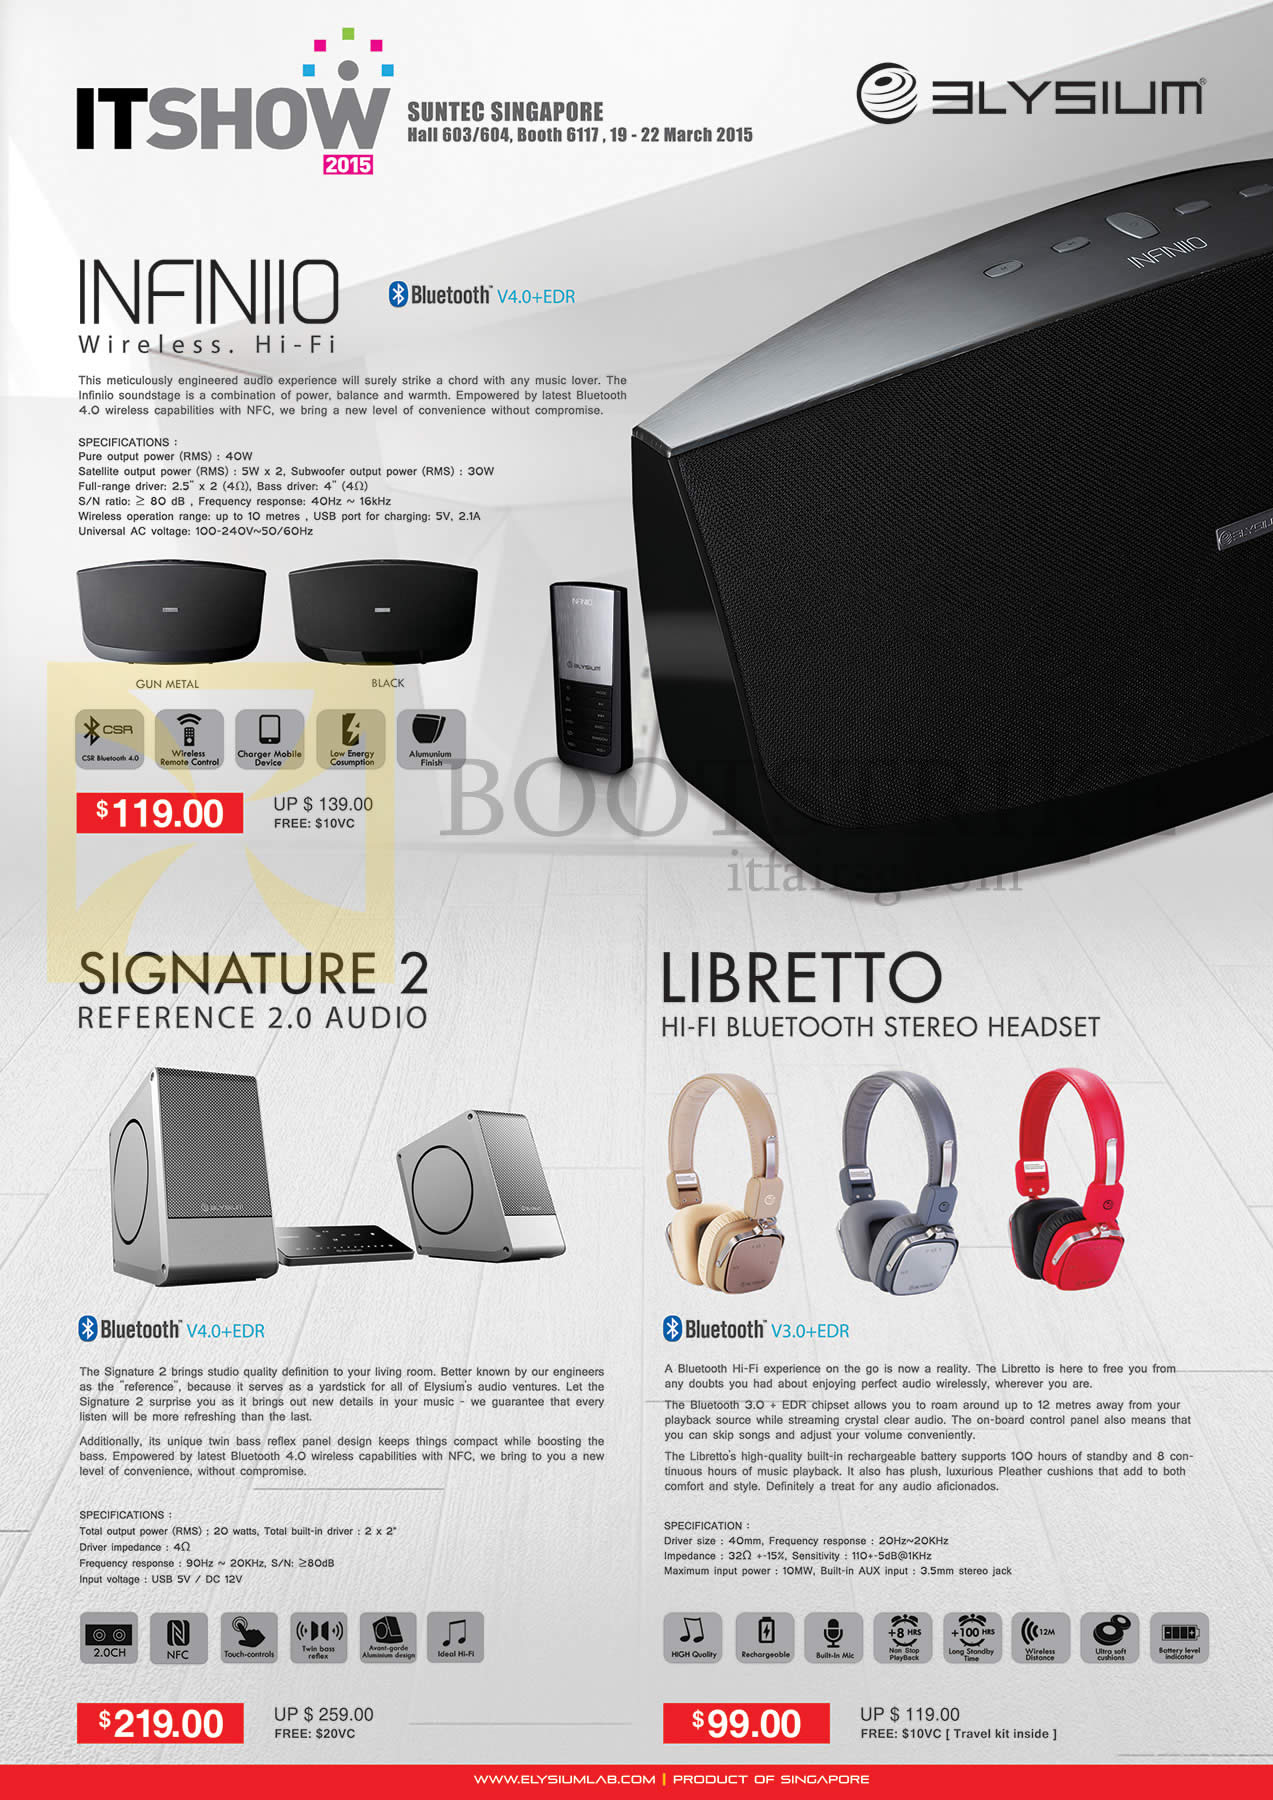 IT SHOW 2015 price list image brochure of Leapfrog Elysium Speakers, Headphones, Infiniio, Signature 2 Reference Audio, Libretto Headset